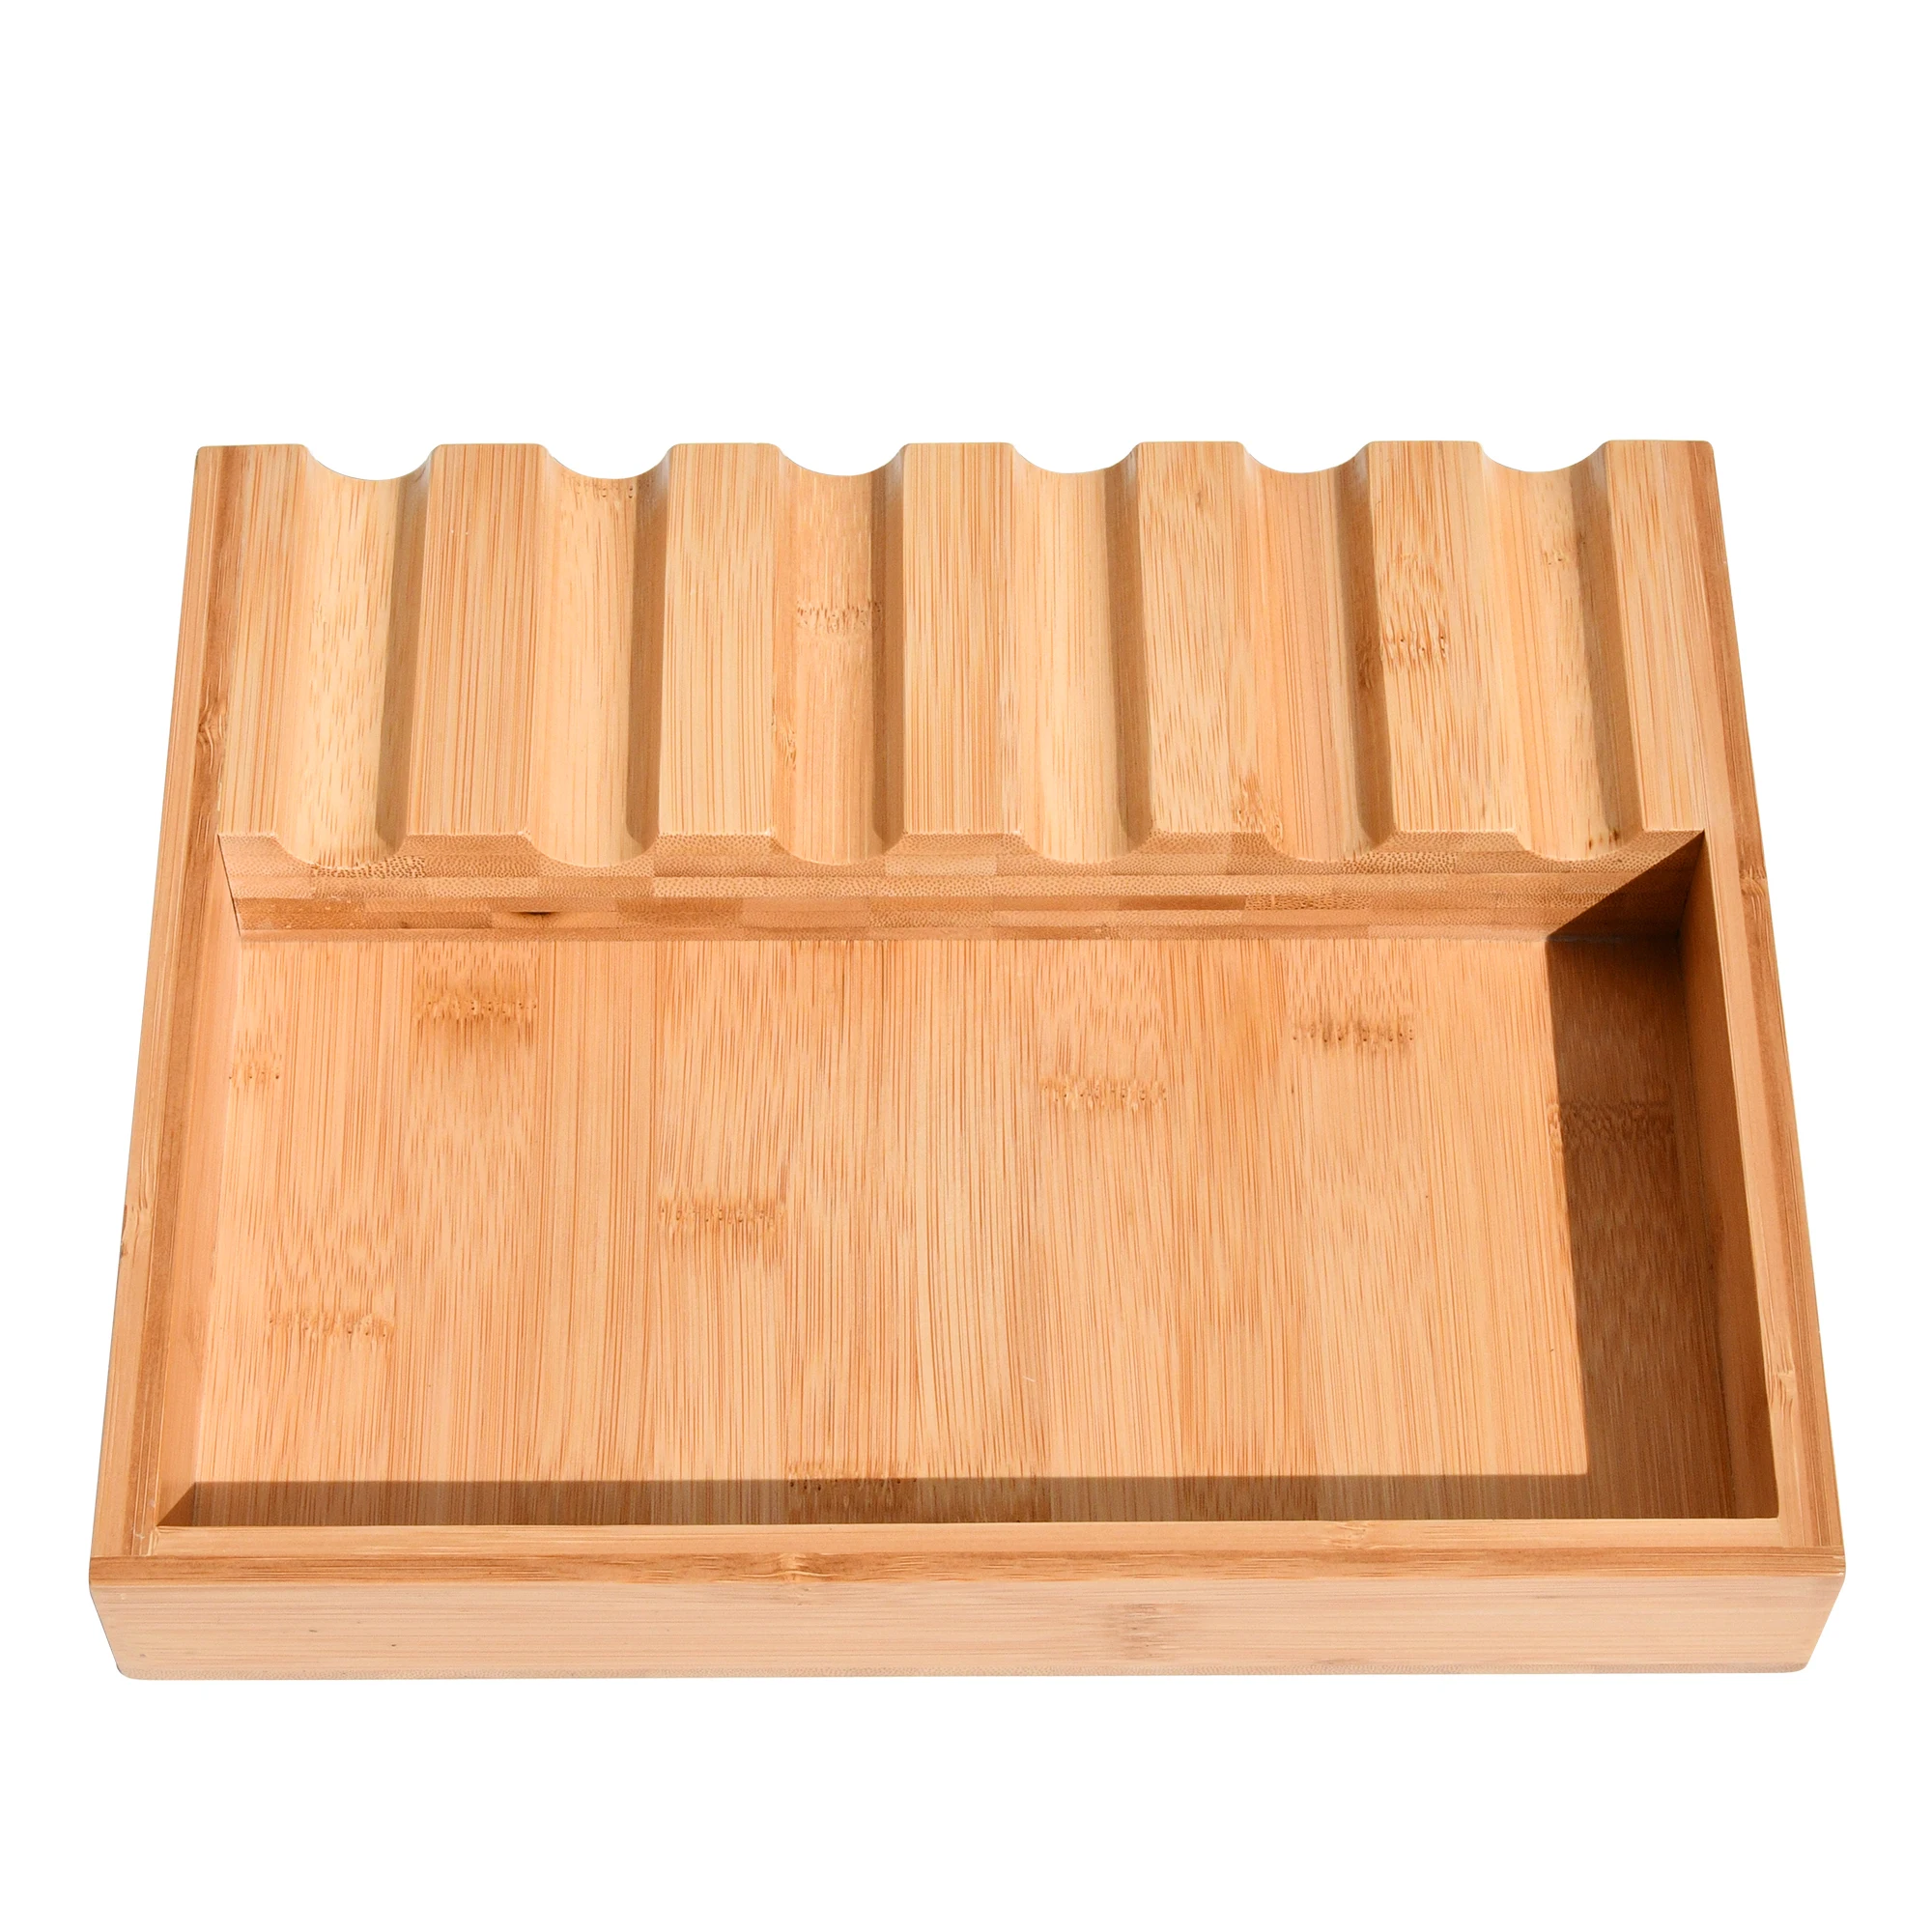 Wooden Spoon Rest Utensil Holder Kitchen With Drip Pad